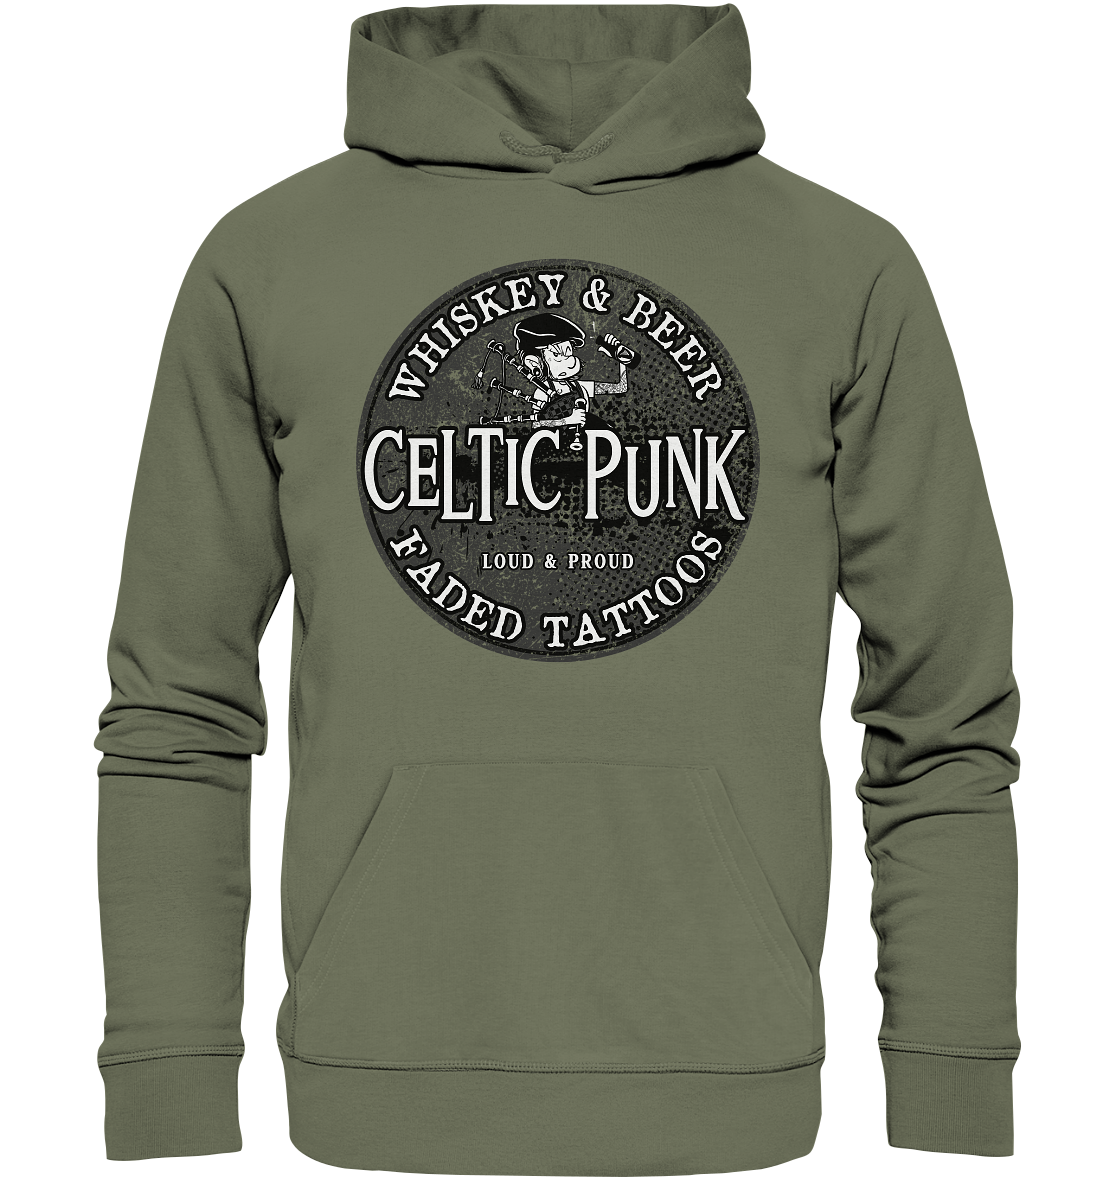 Celtic Punk "Whiskey, Beer & Faded Tattoos" - Premium Unisex Hoodie